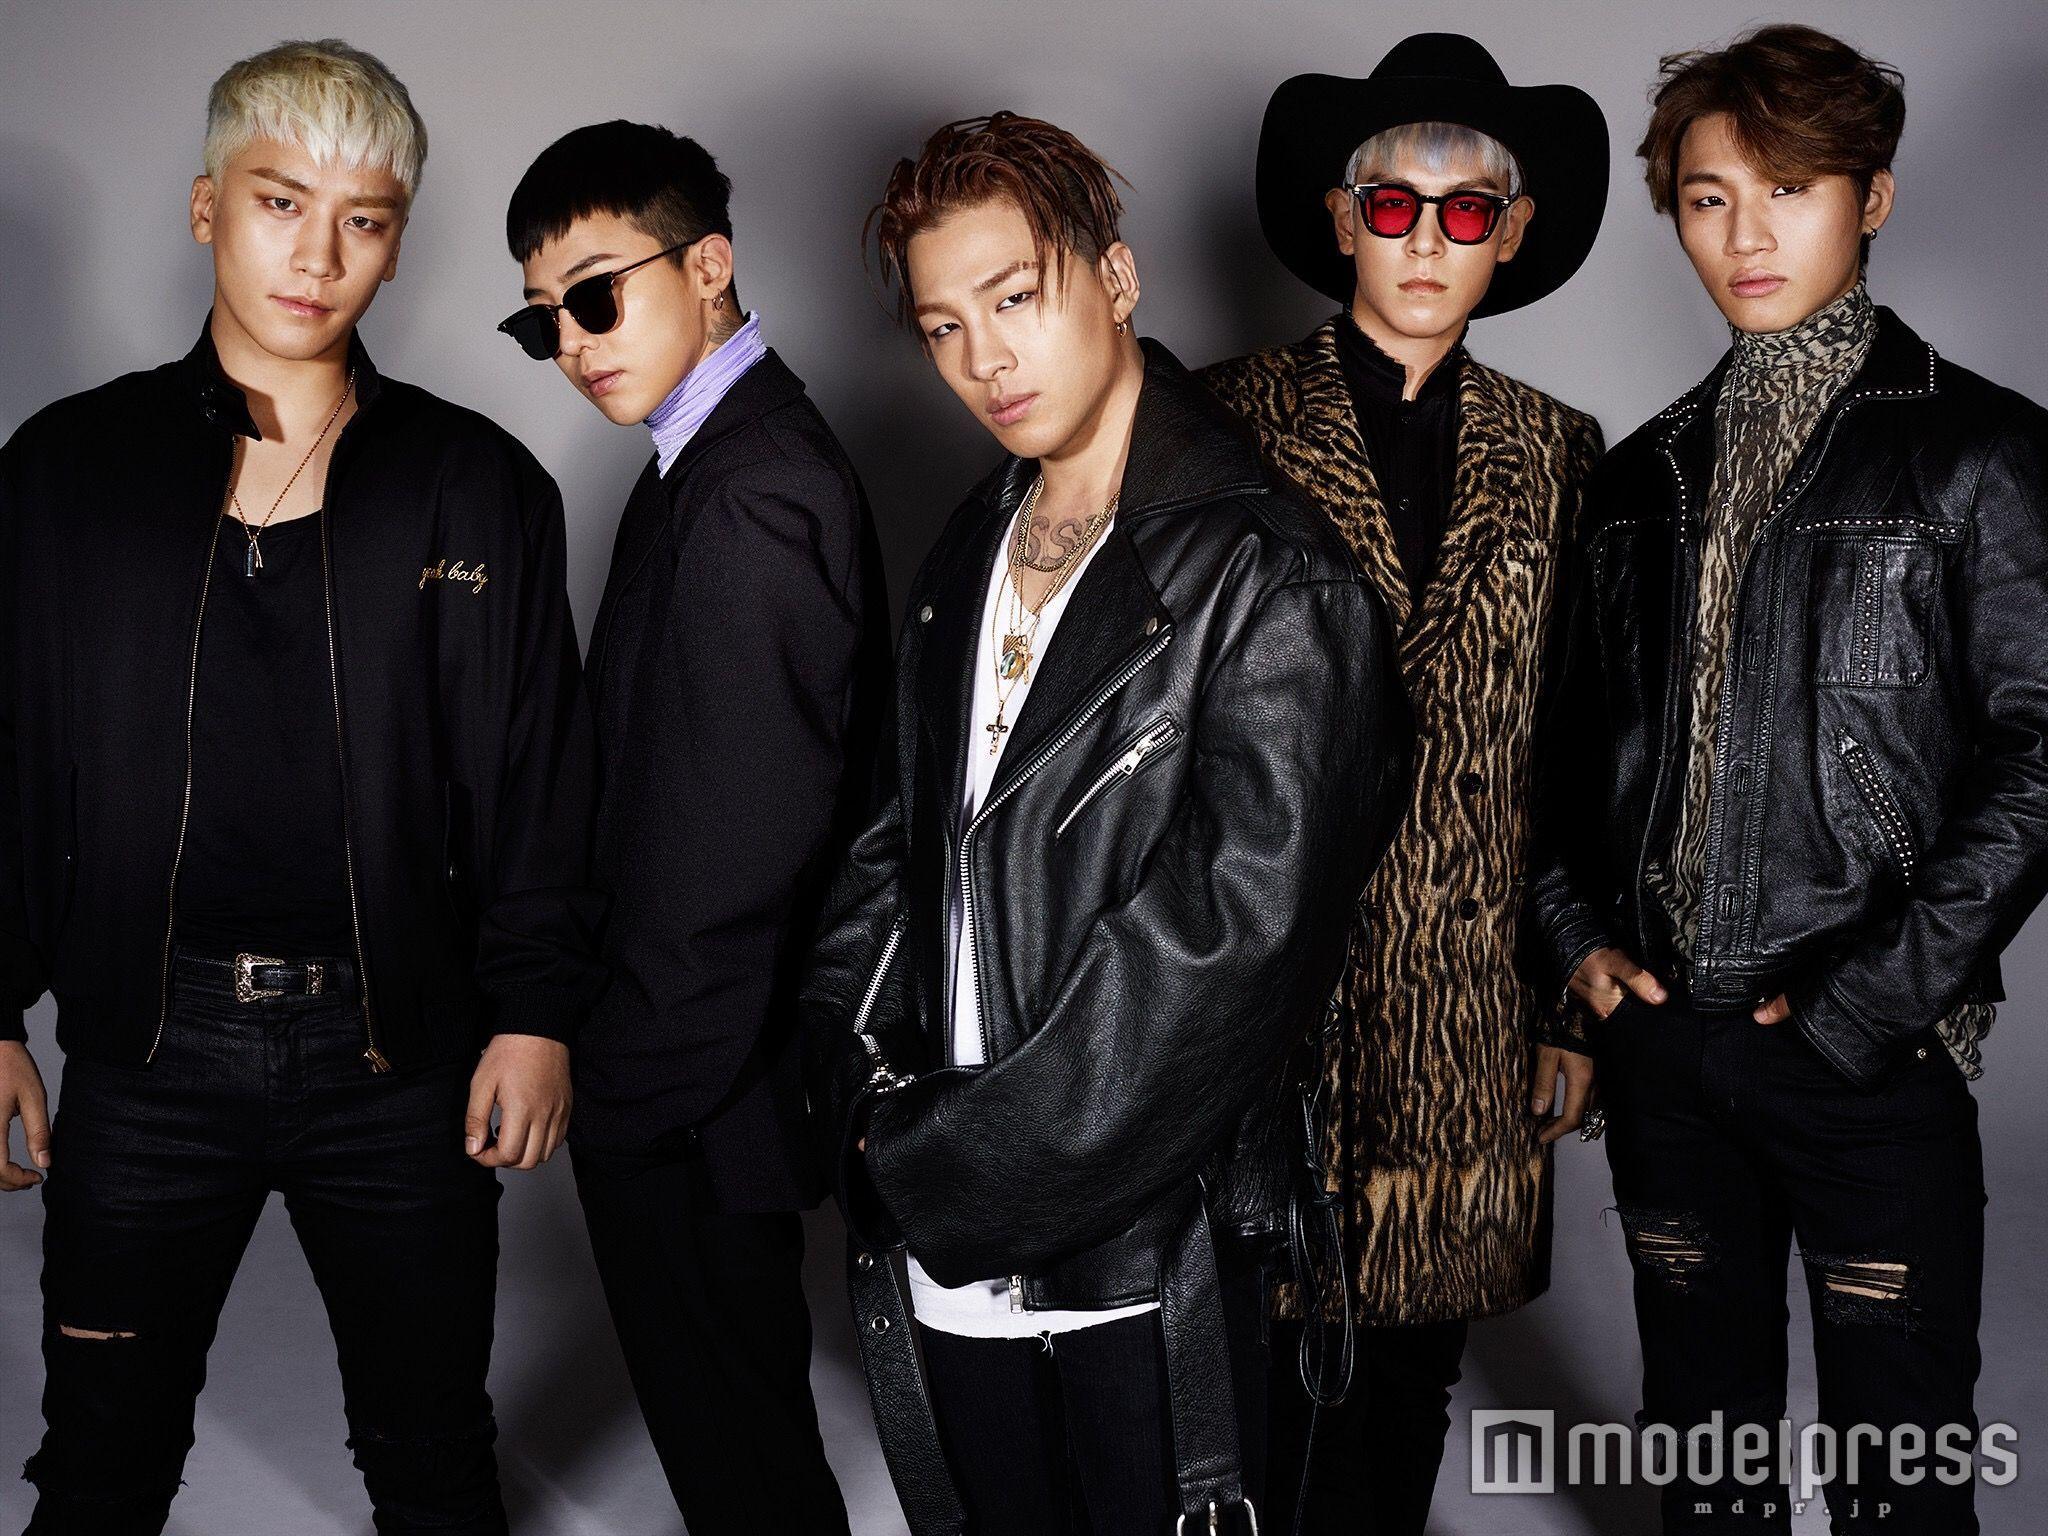 ENG Trans BIGBANG Modelpress Interview Japan 2016 02 23